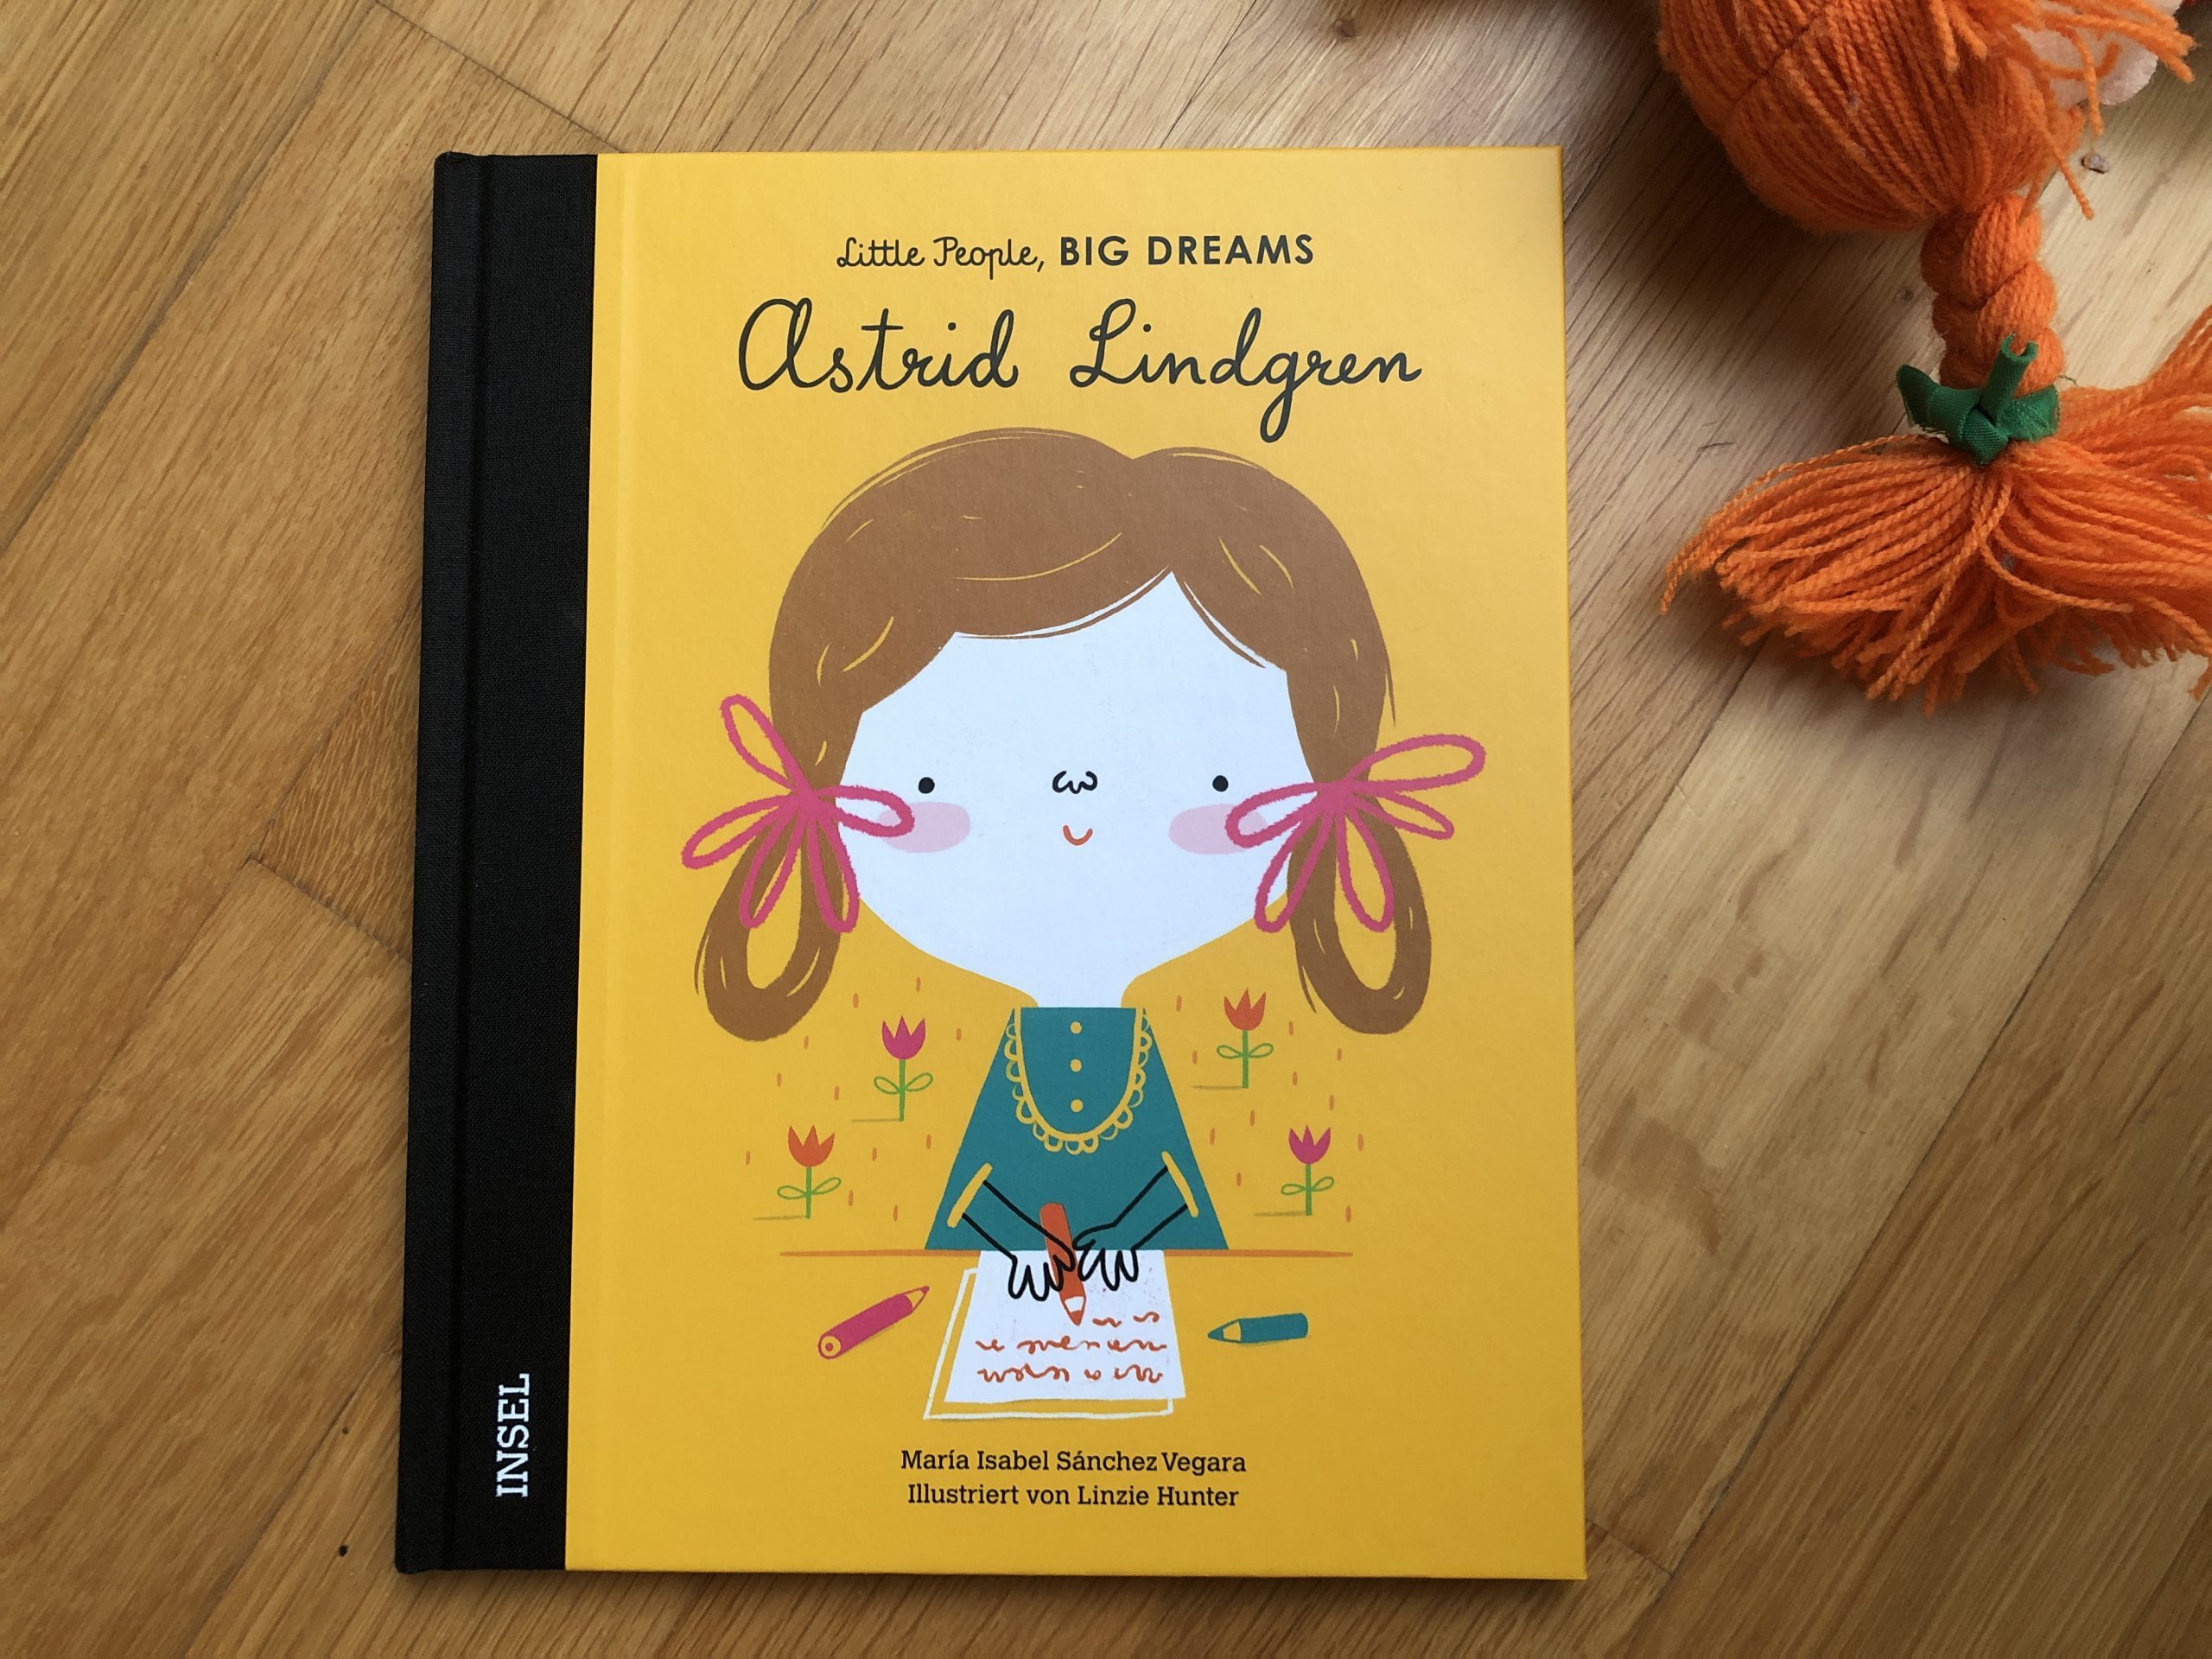 Little People, BIG DREAMS: Astrid Lindgren